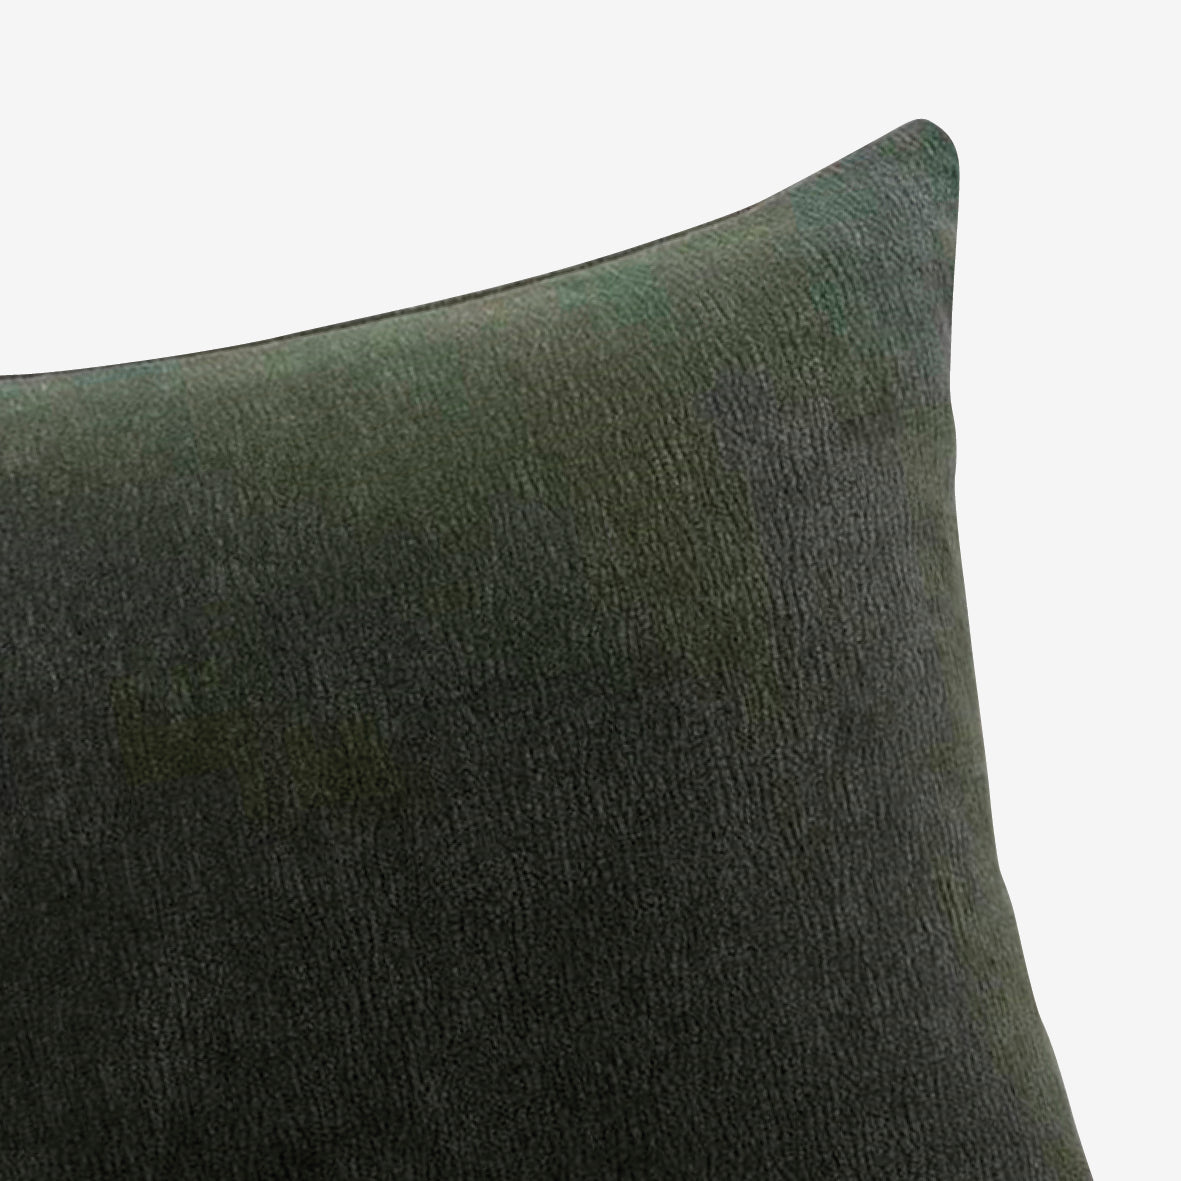 Cushion cover Yara Green - 45 x 45 cm